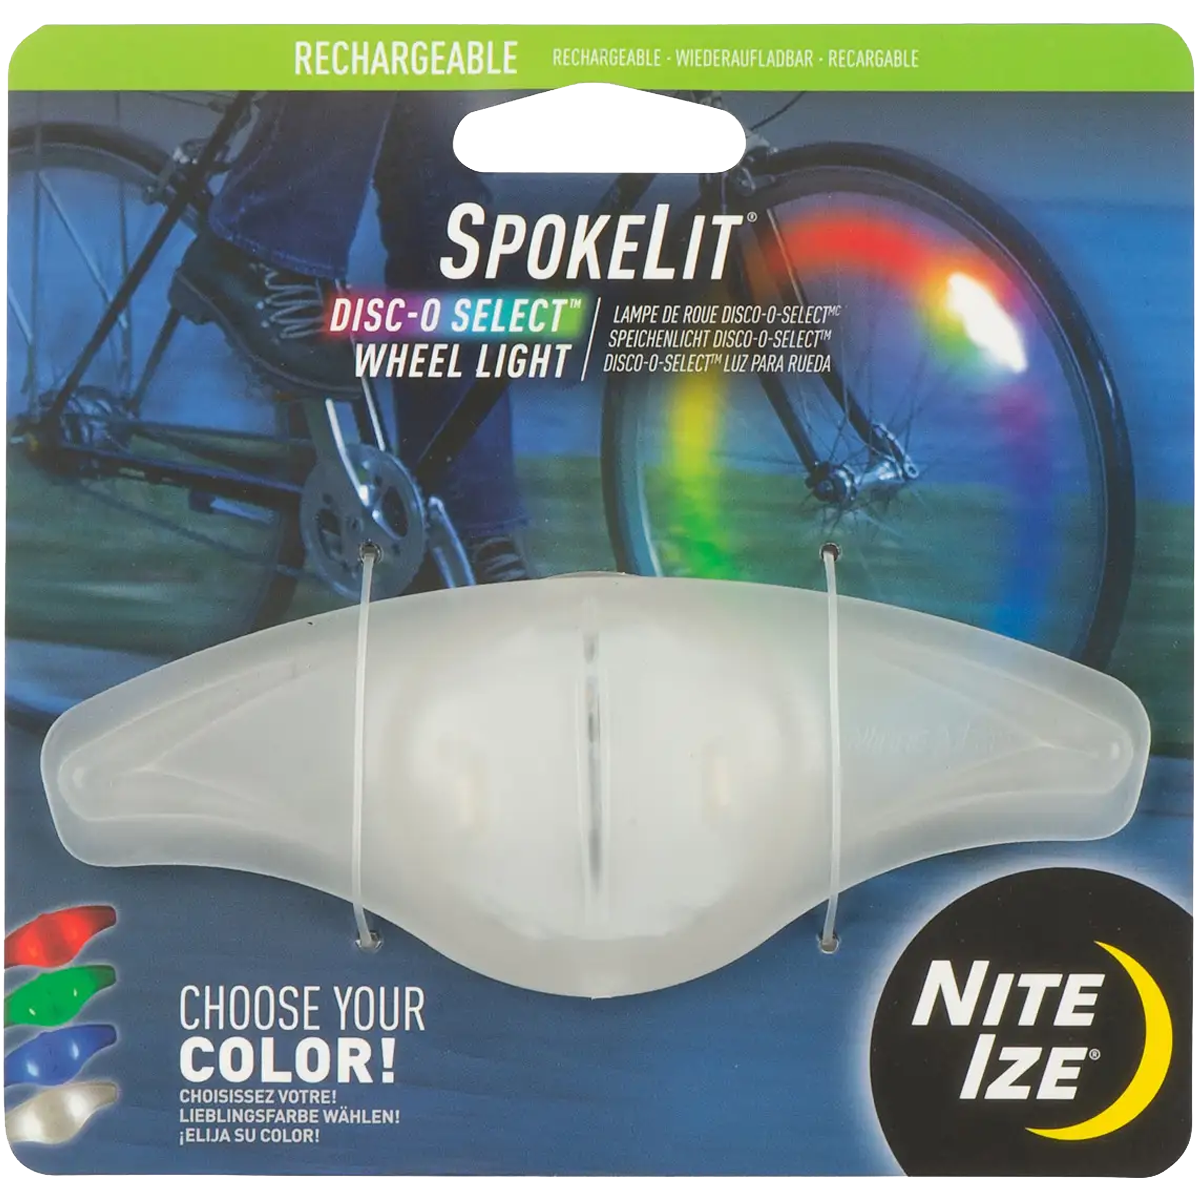 SpokeLit Rechargeable Disco-Select Wheel Light alternate view